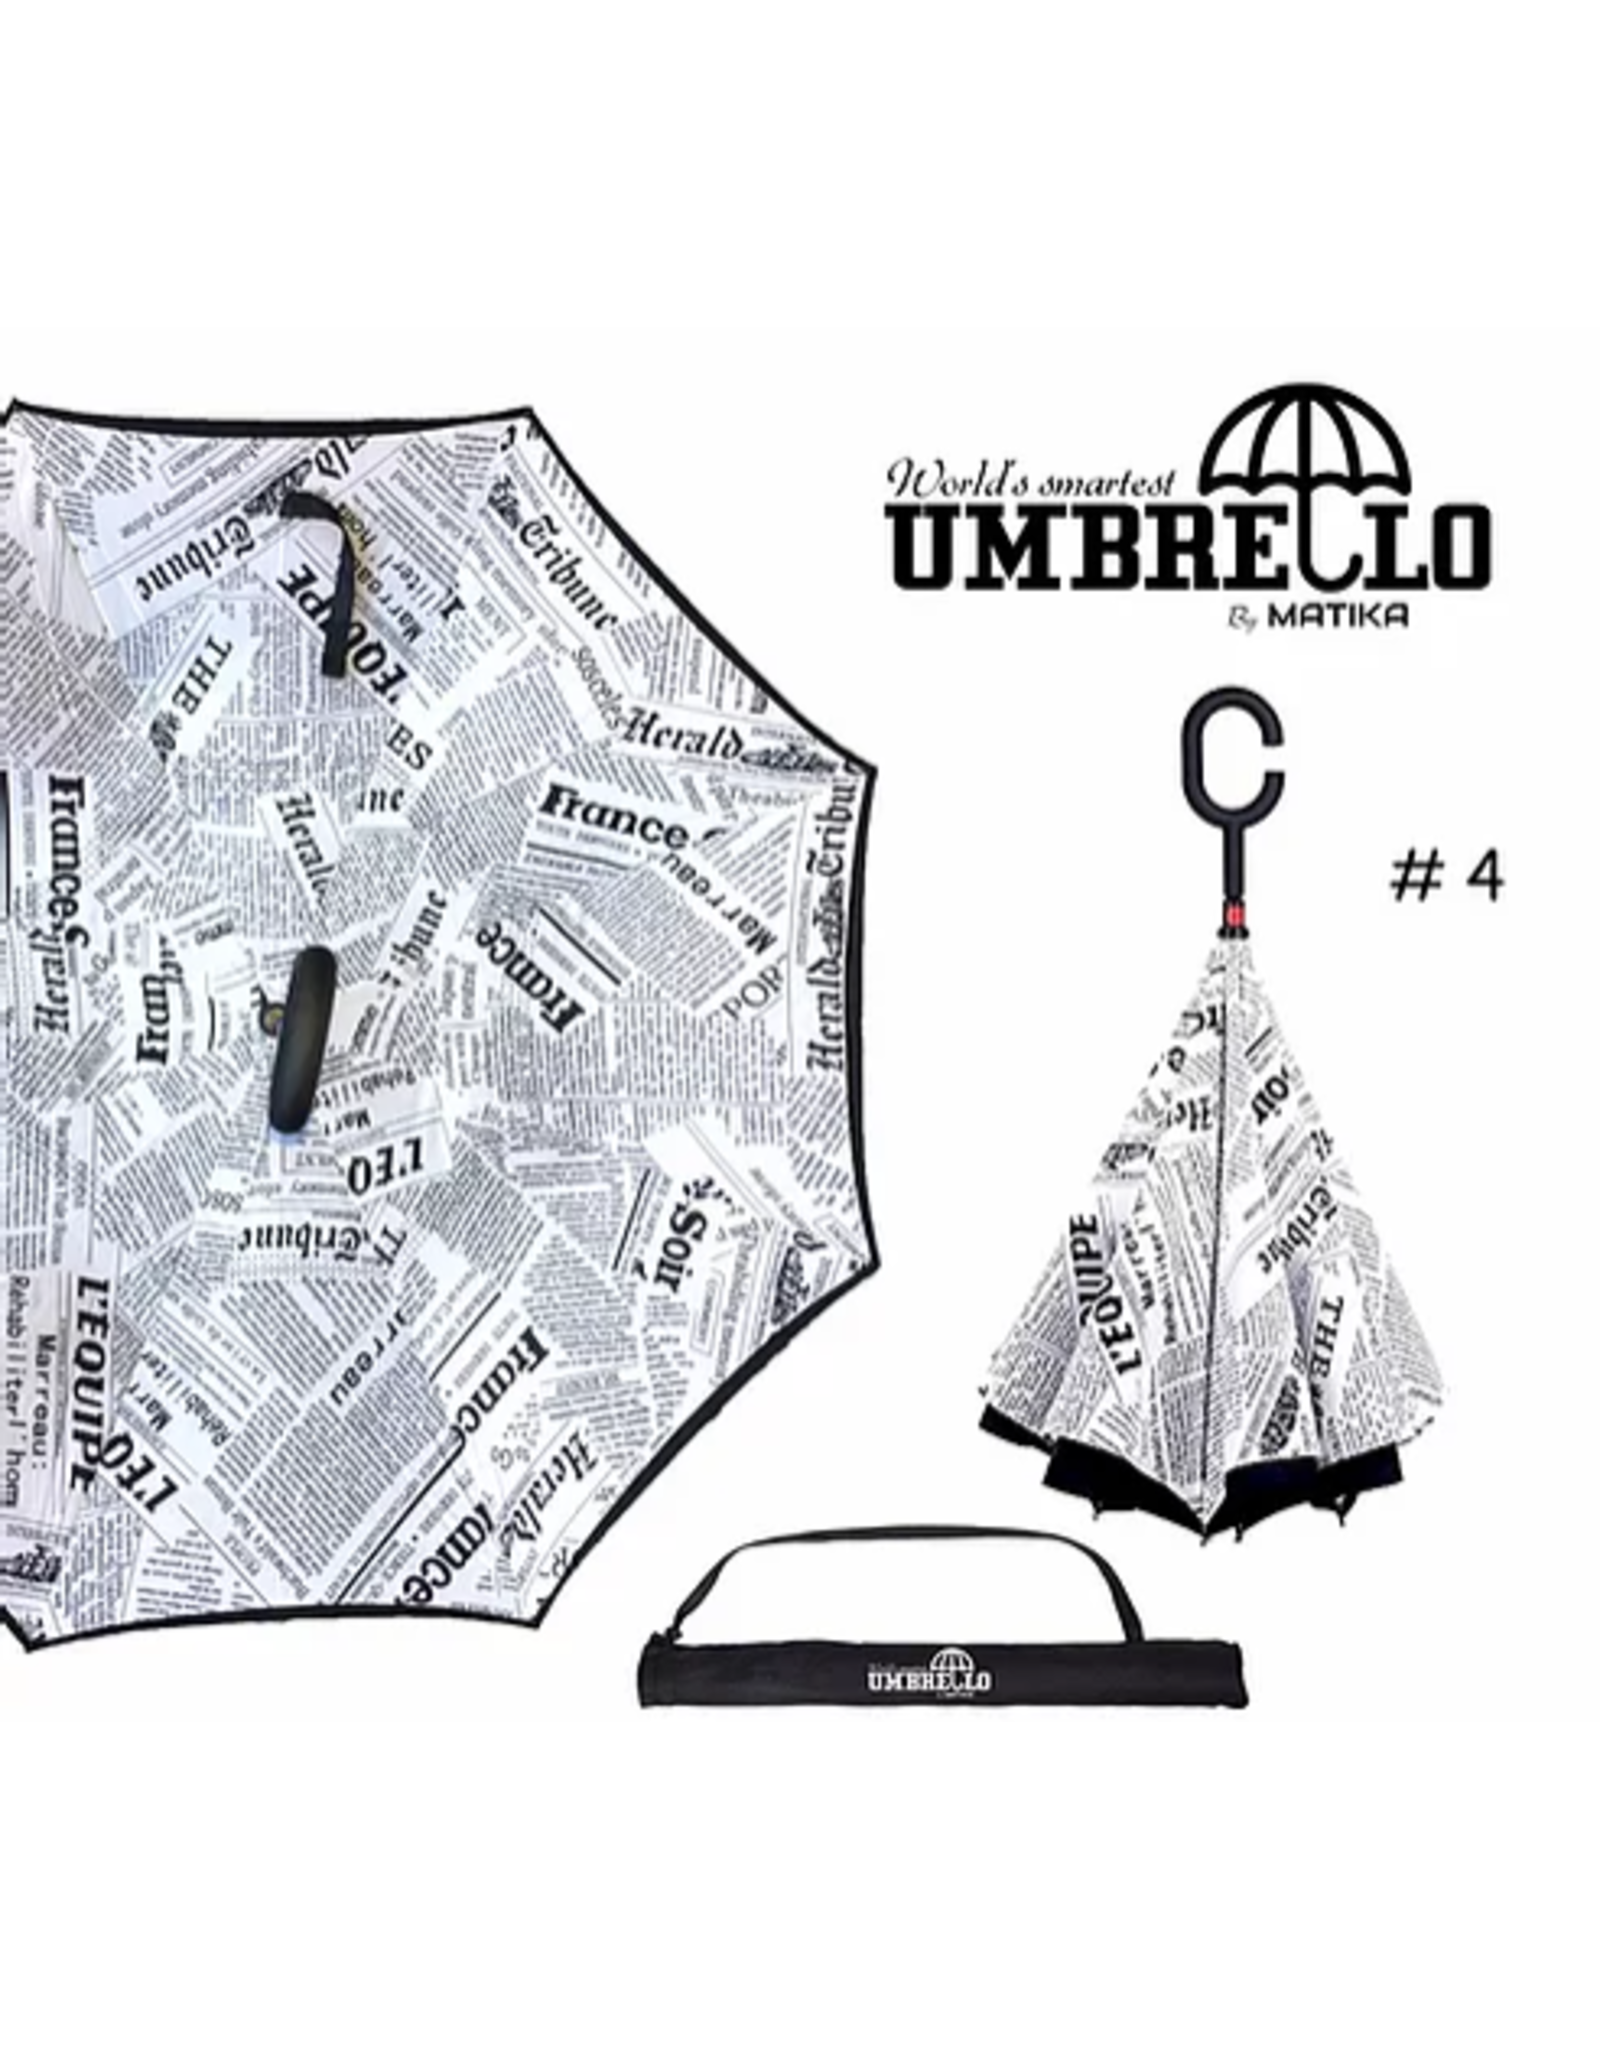 Umbrello Umbrella News Print Black and White